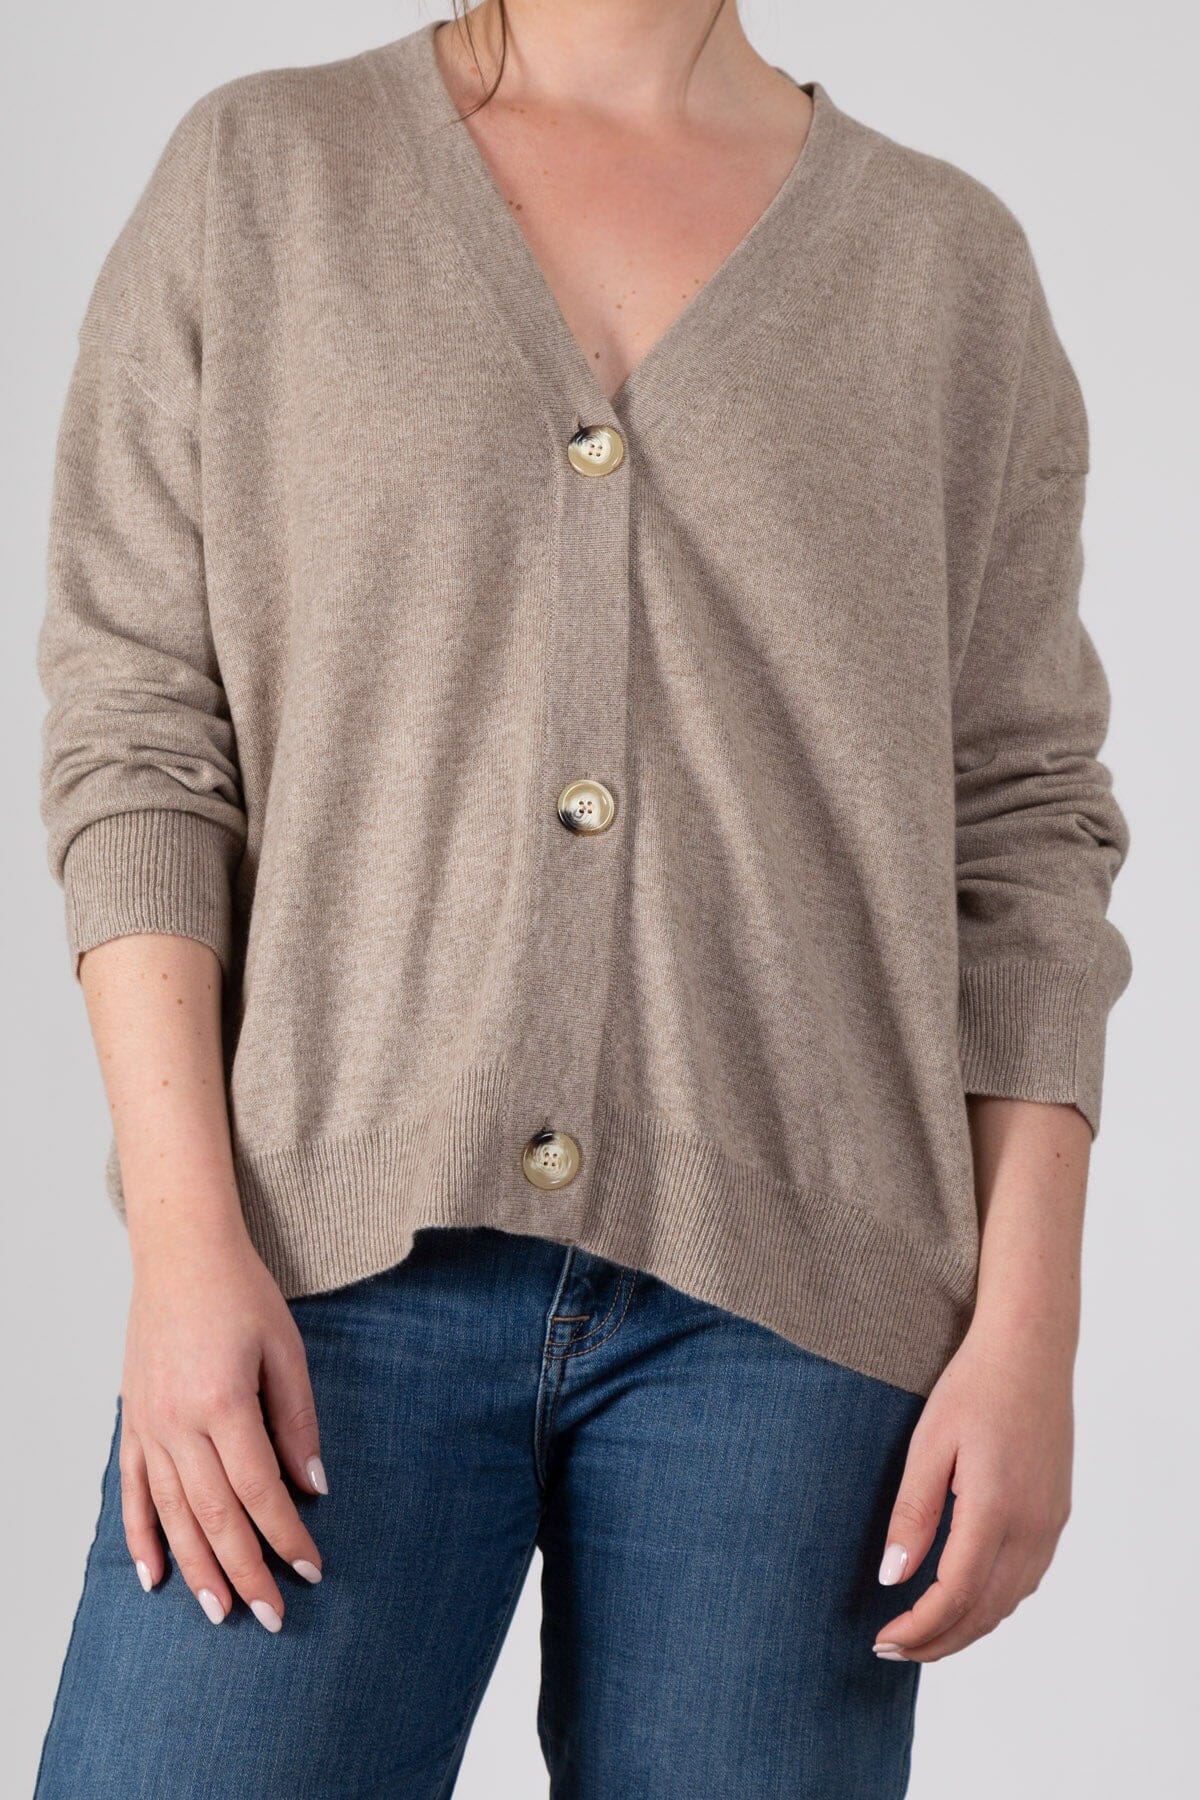 Lightweight Cardigan Sweater S30 - Spring Cashmere CP Shades natural dark